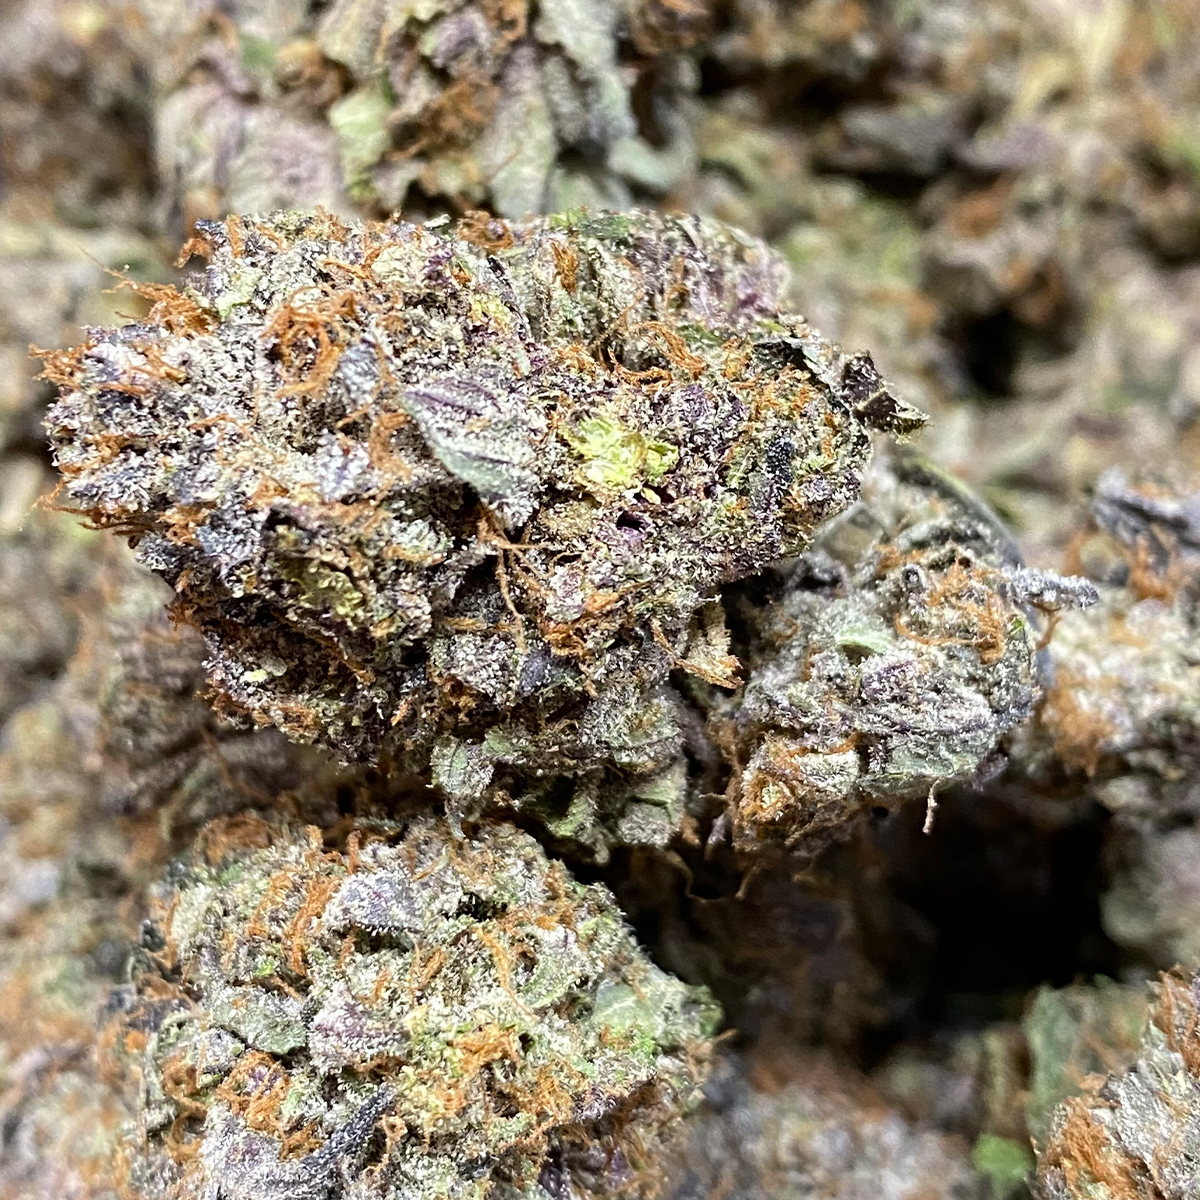 Purple Death Bubba | Buy Weed Online| Dispensary Near Me